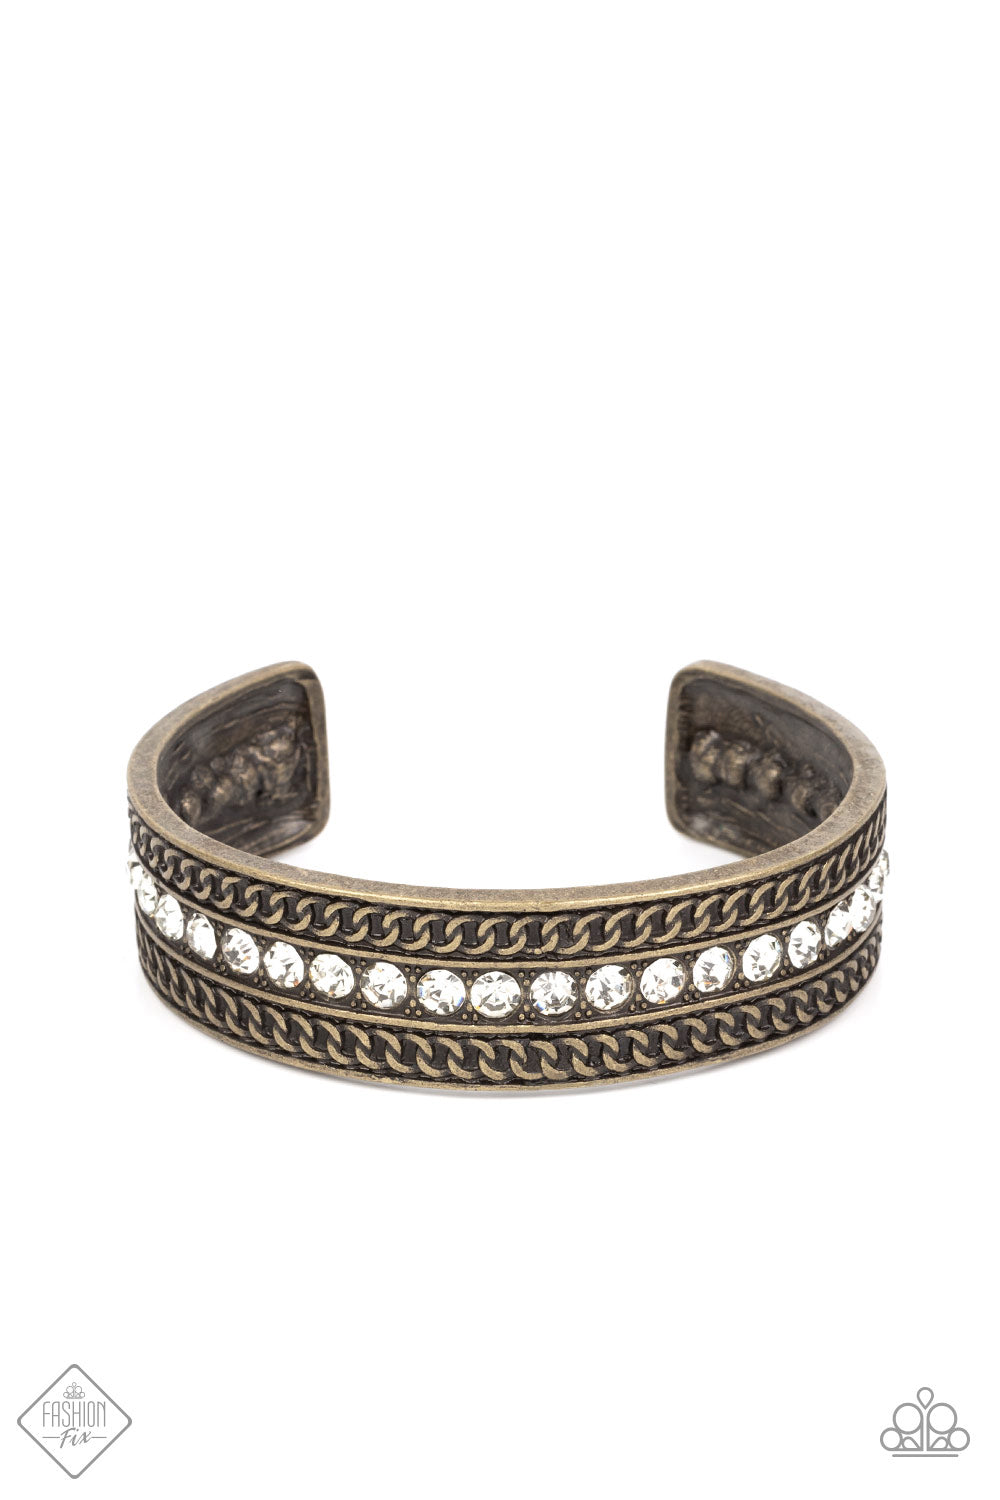 Paparazzi Grit Goals - Brass Bracelet - Fashion Fix - A Finishing Touch Jewelry